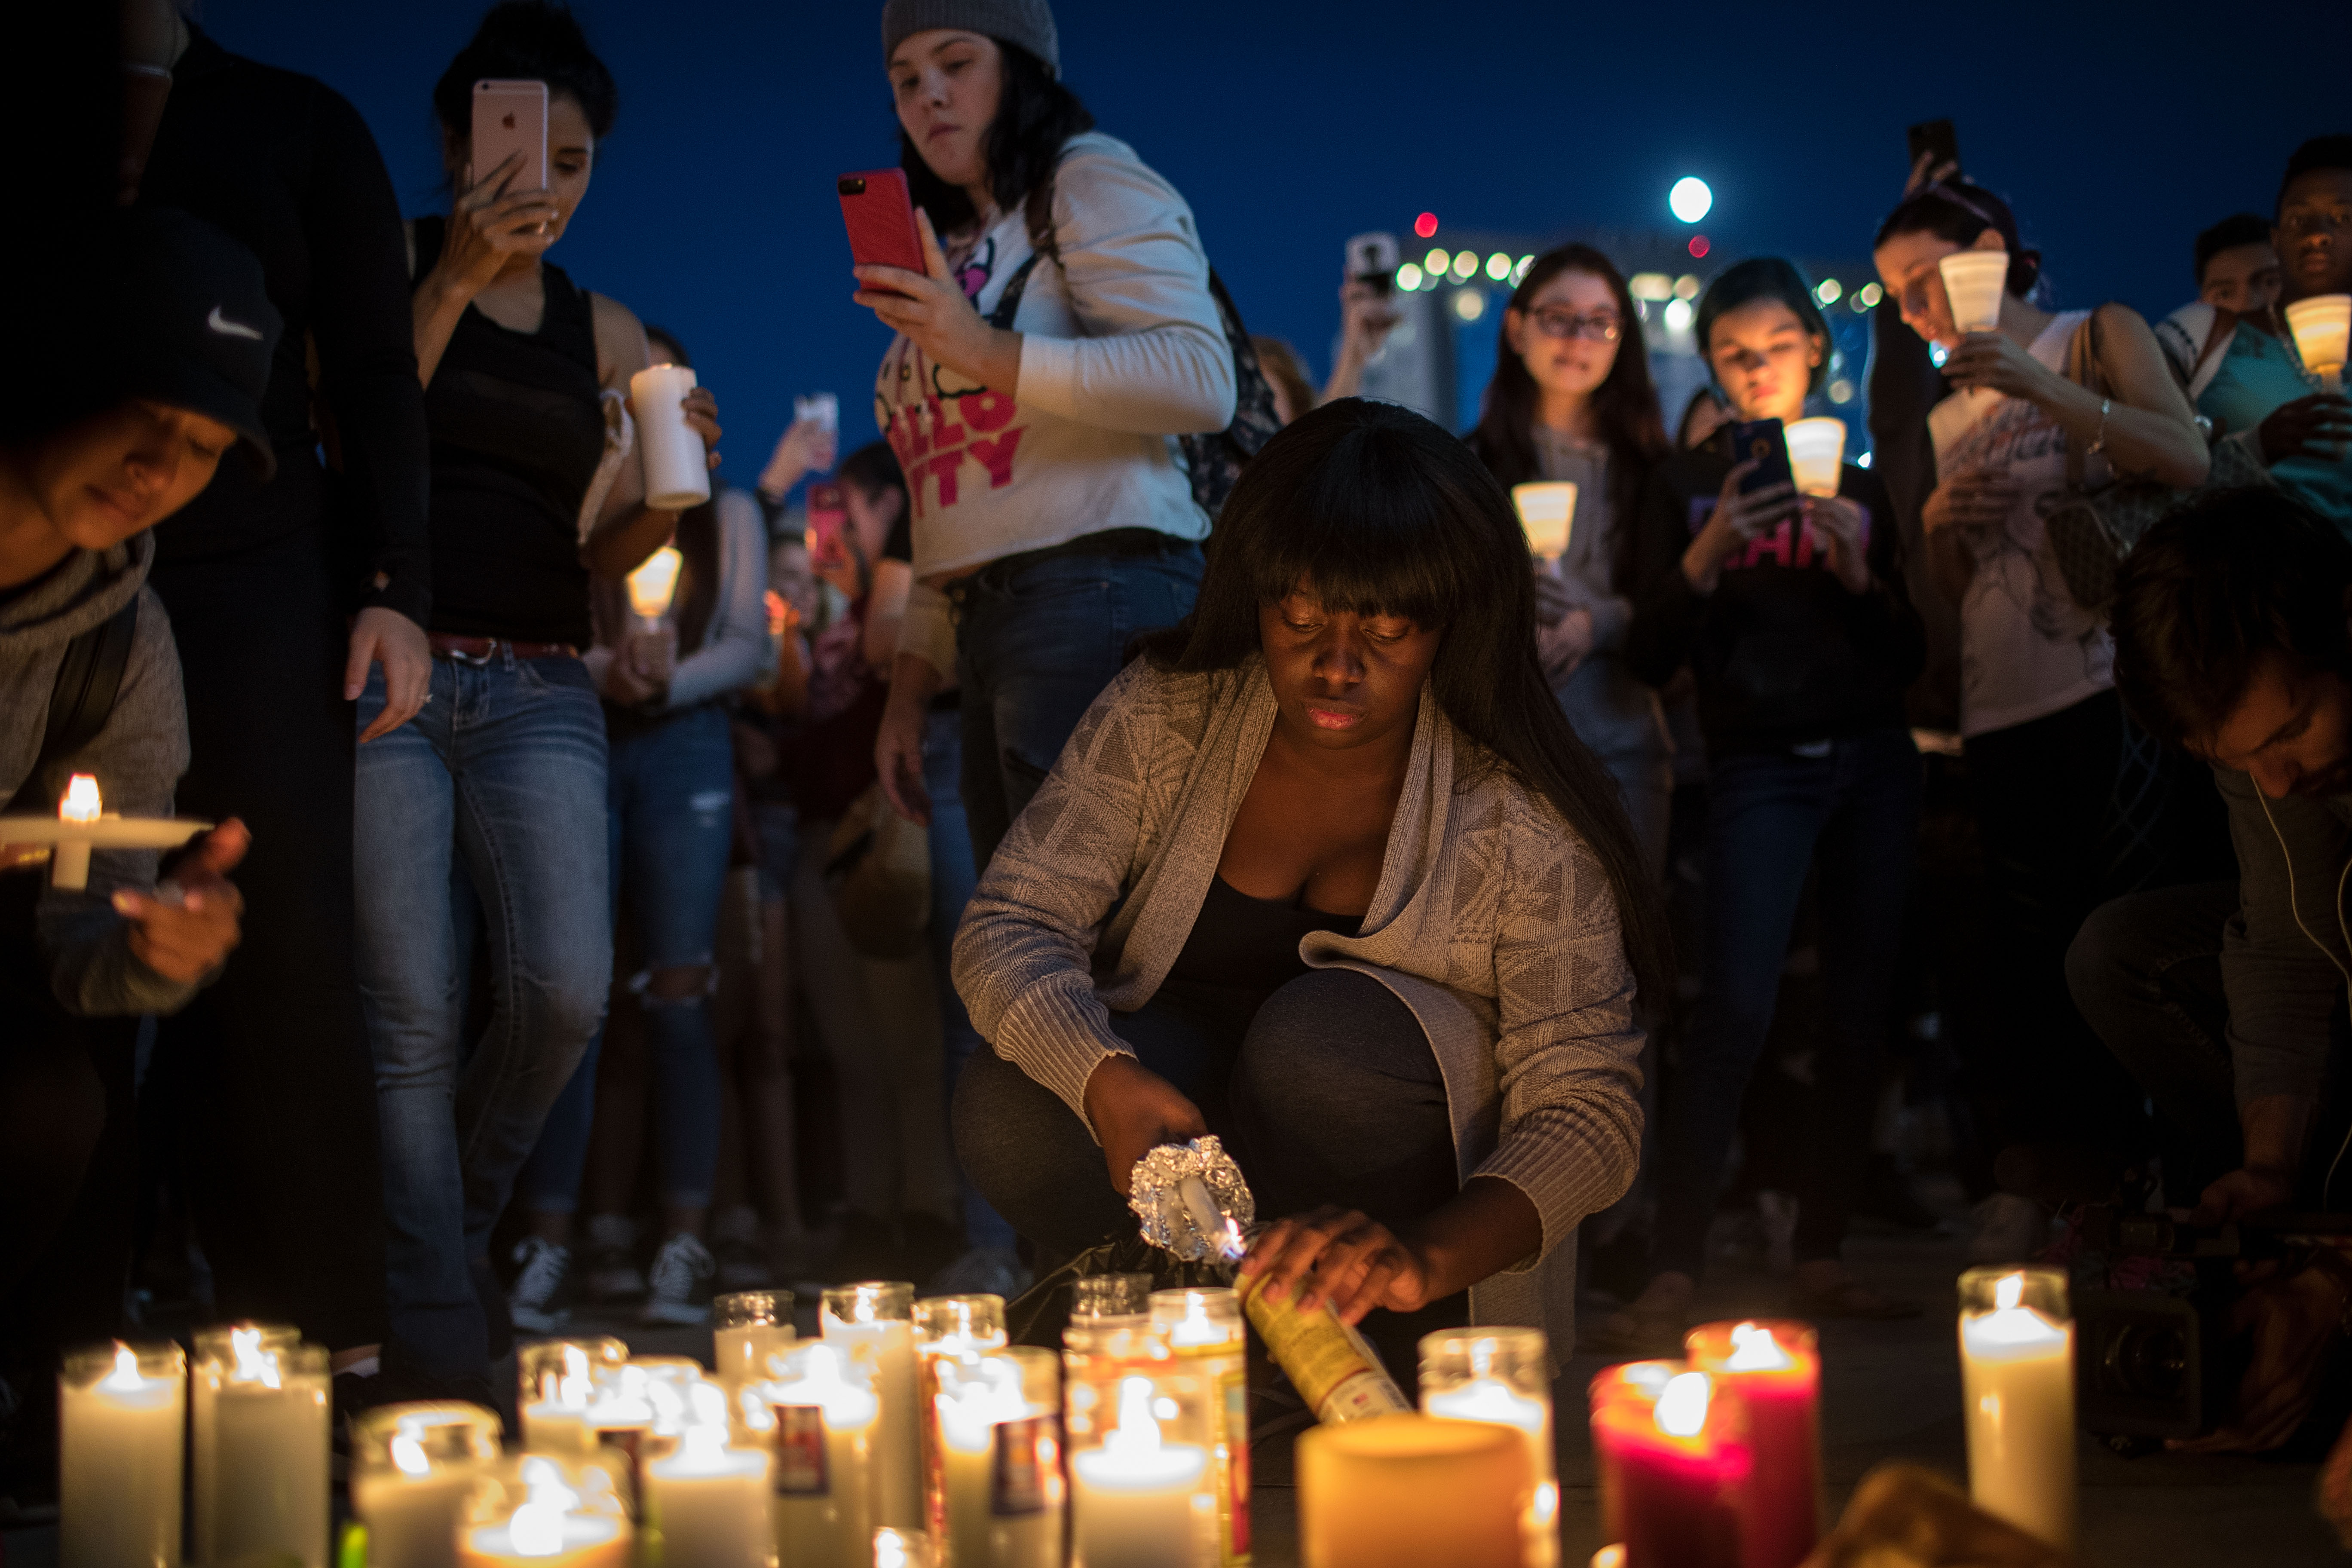 Mass Shooting At Mandalay Bay In Las Vegas Leaves At Least 50 Dead Cnn 9466